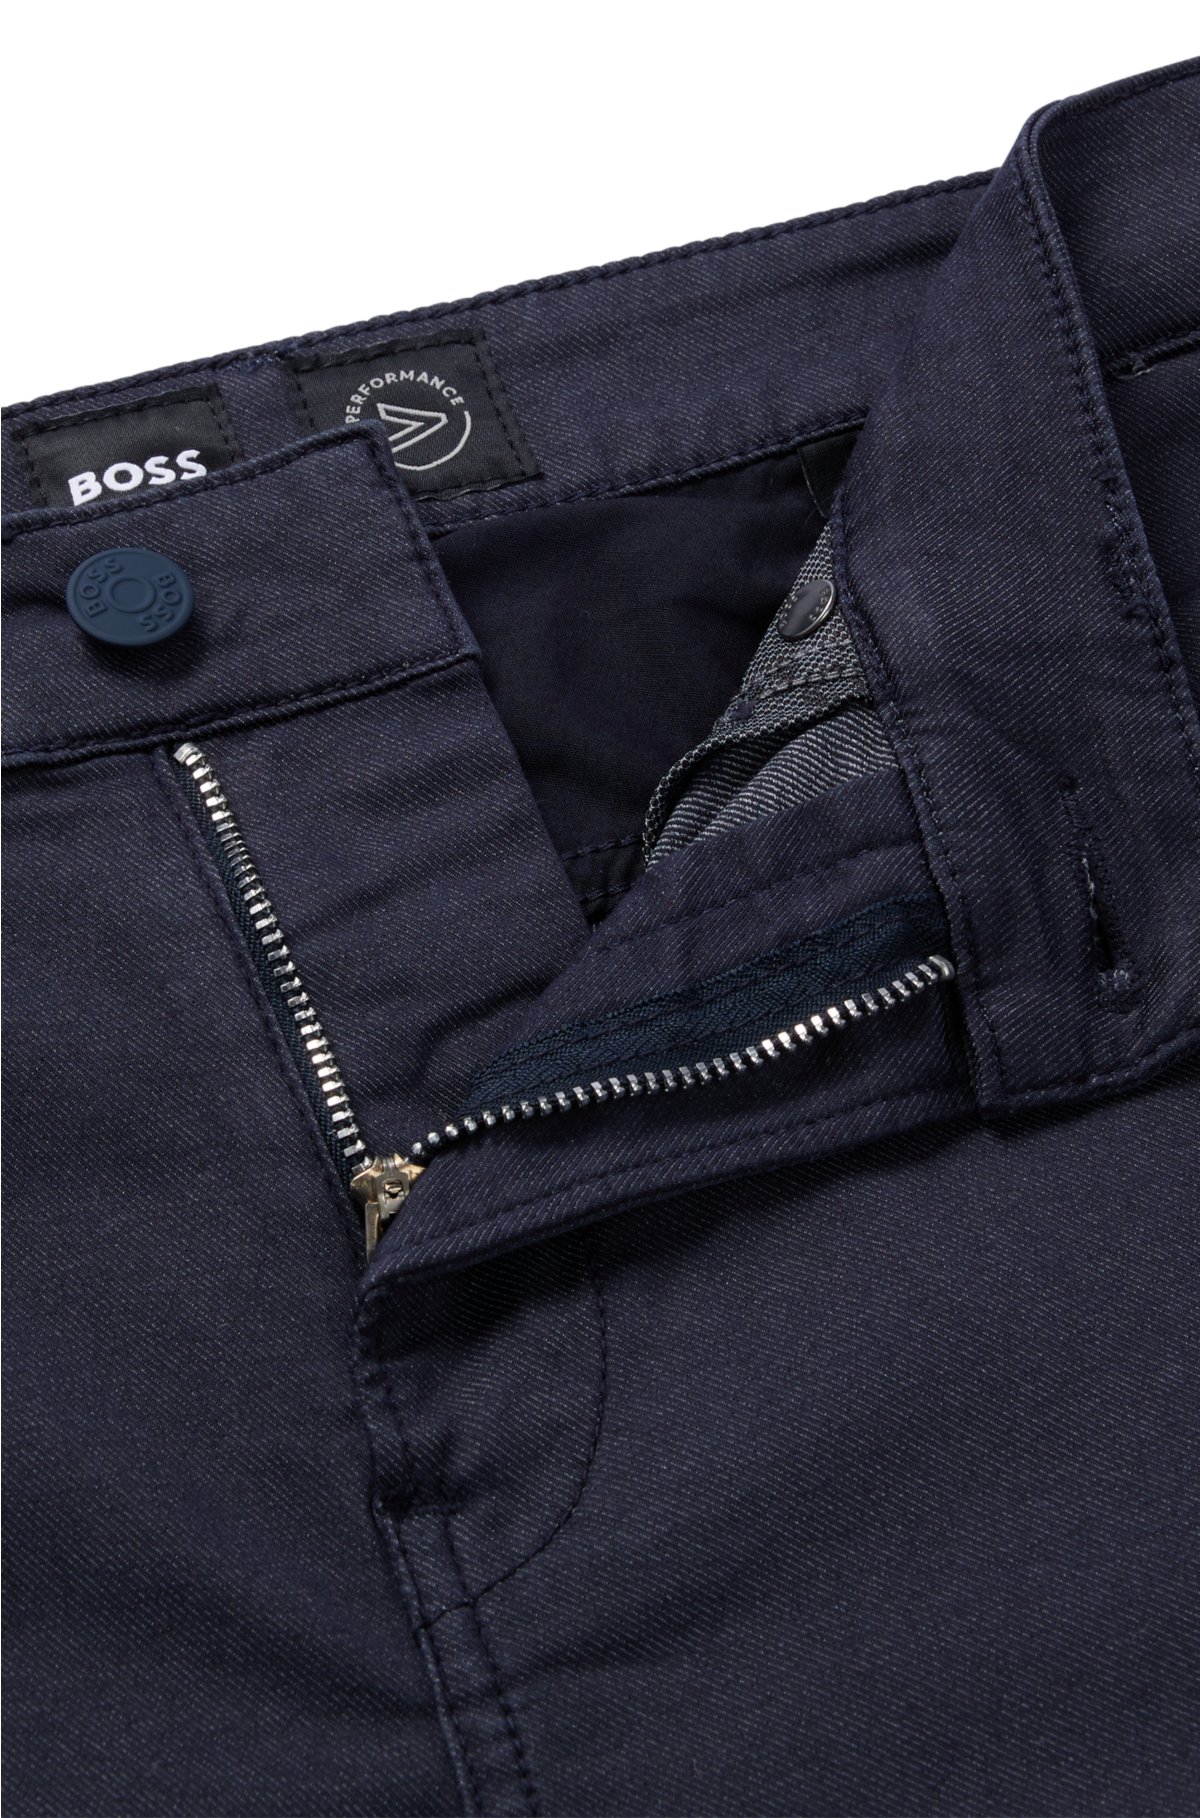 Ontwijken kussen Inpakken BOSS - Slim-fit regular-rise jeans in performance denim